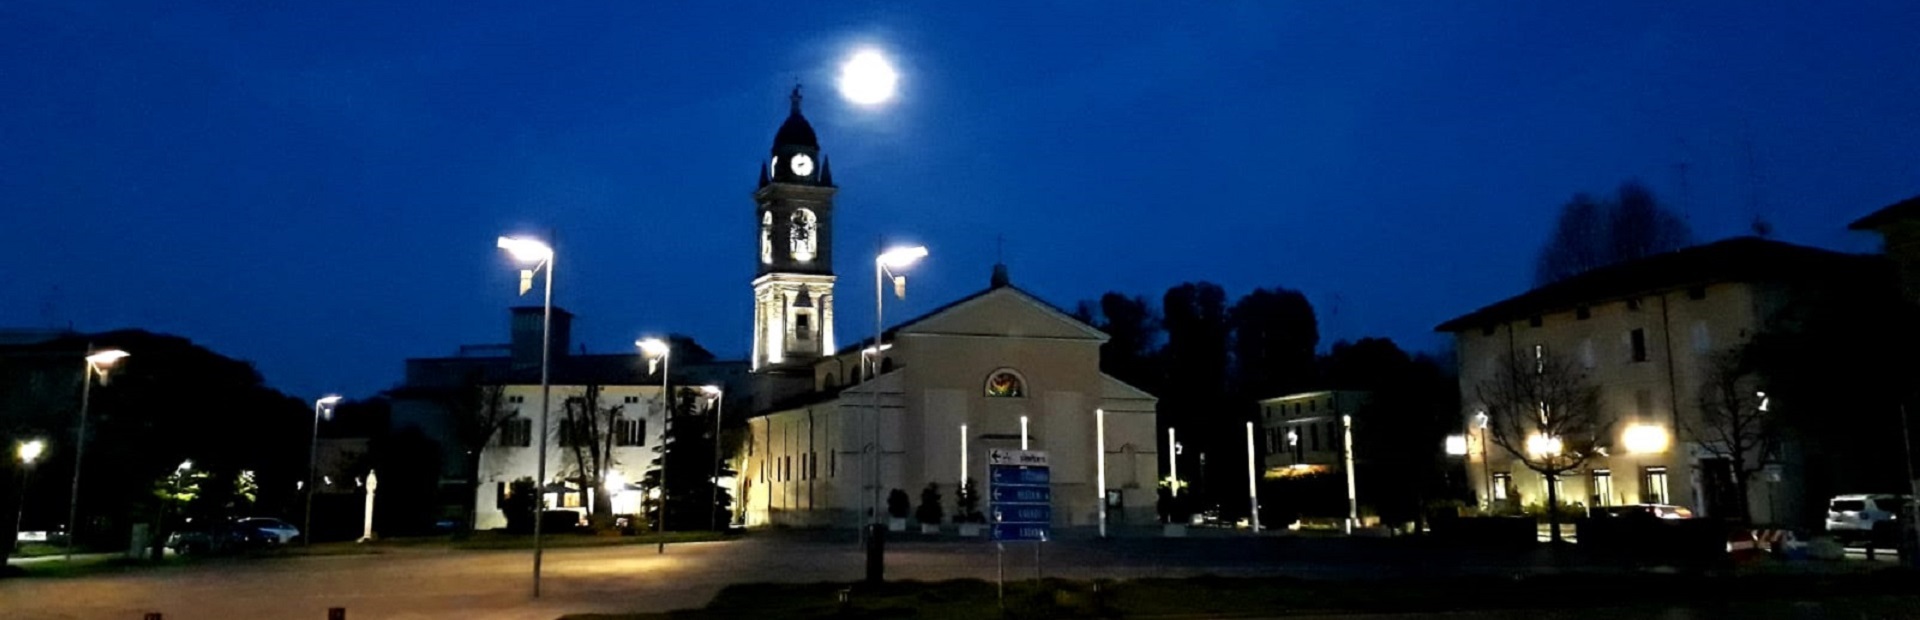 chiesa by night